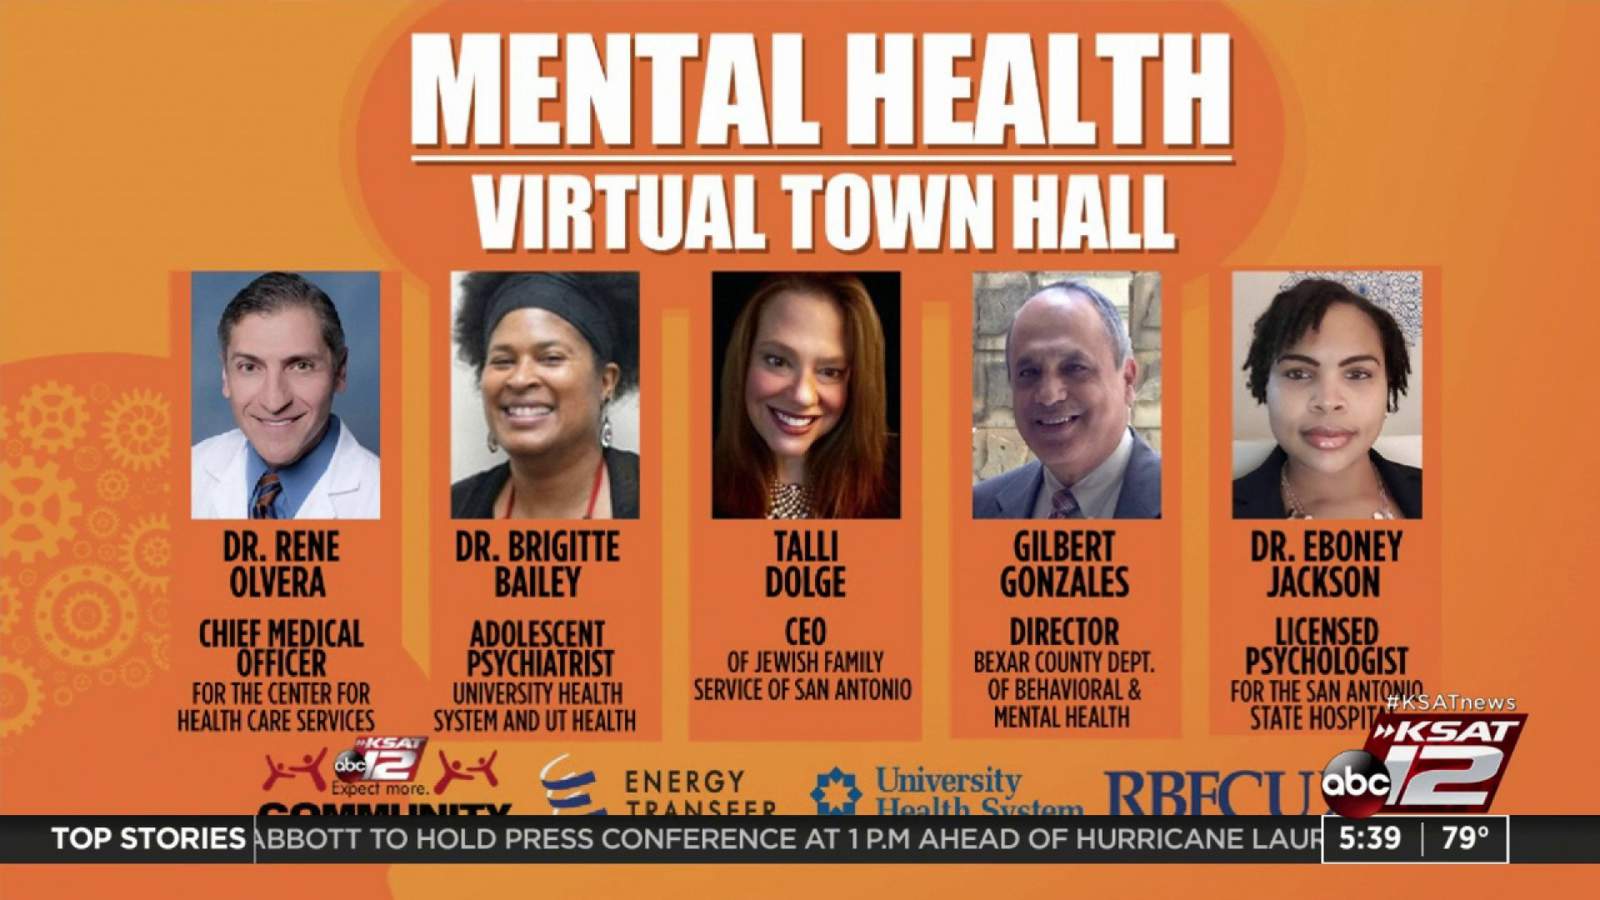 KSAT Community to livestream Mental Health Virtual Town Hall